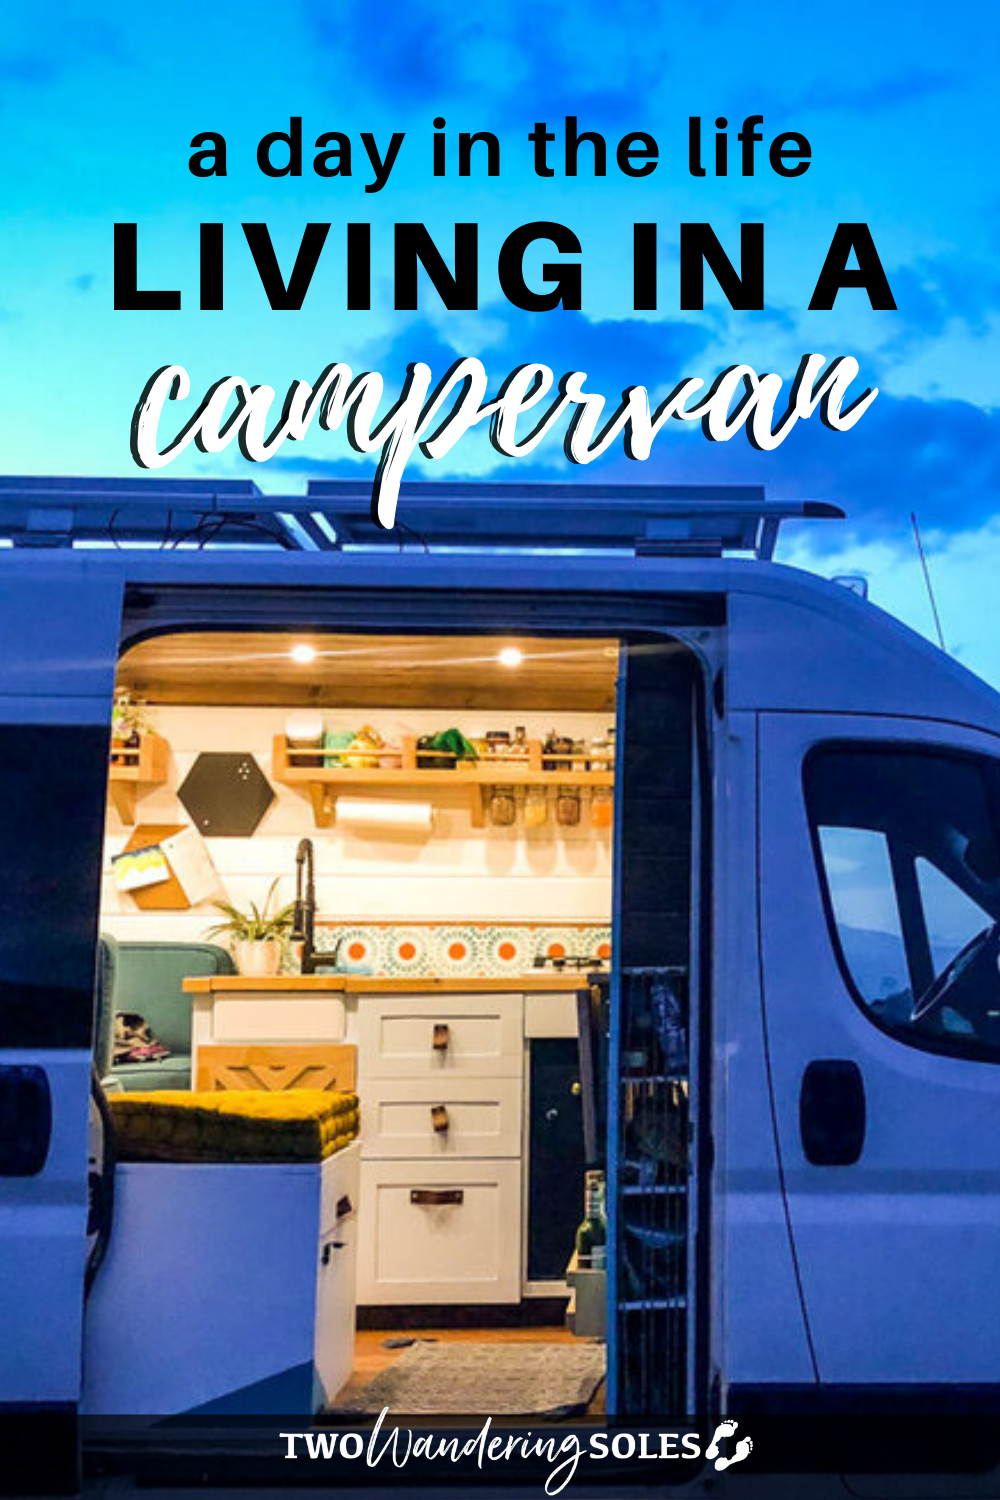 Living in a Campervan